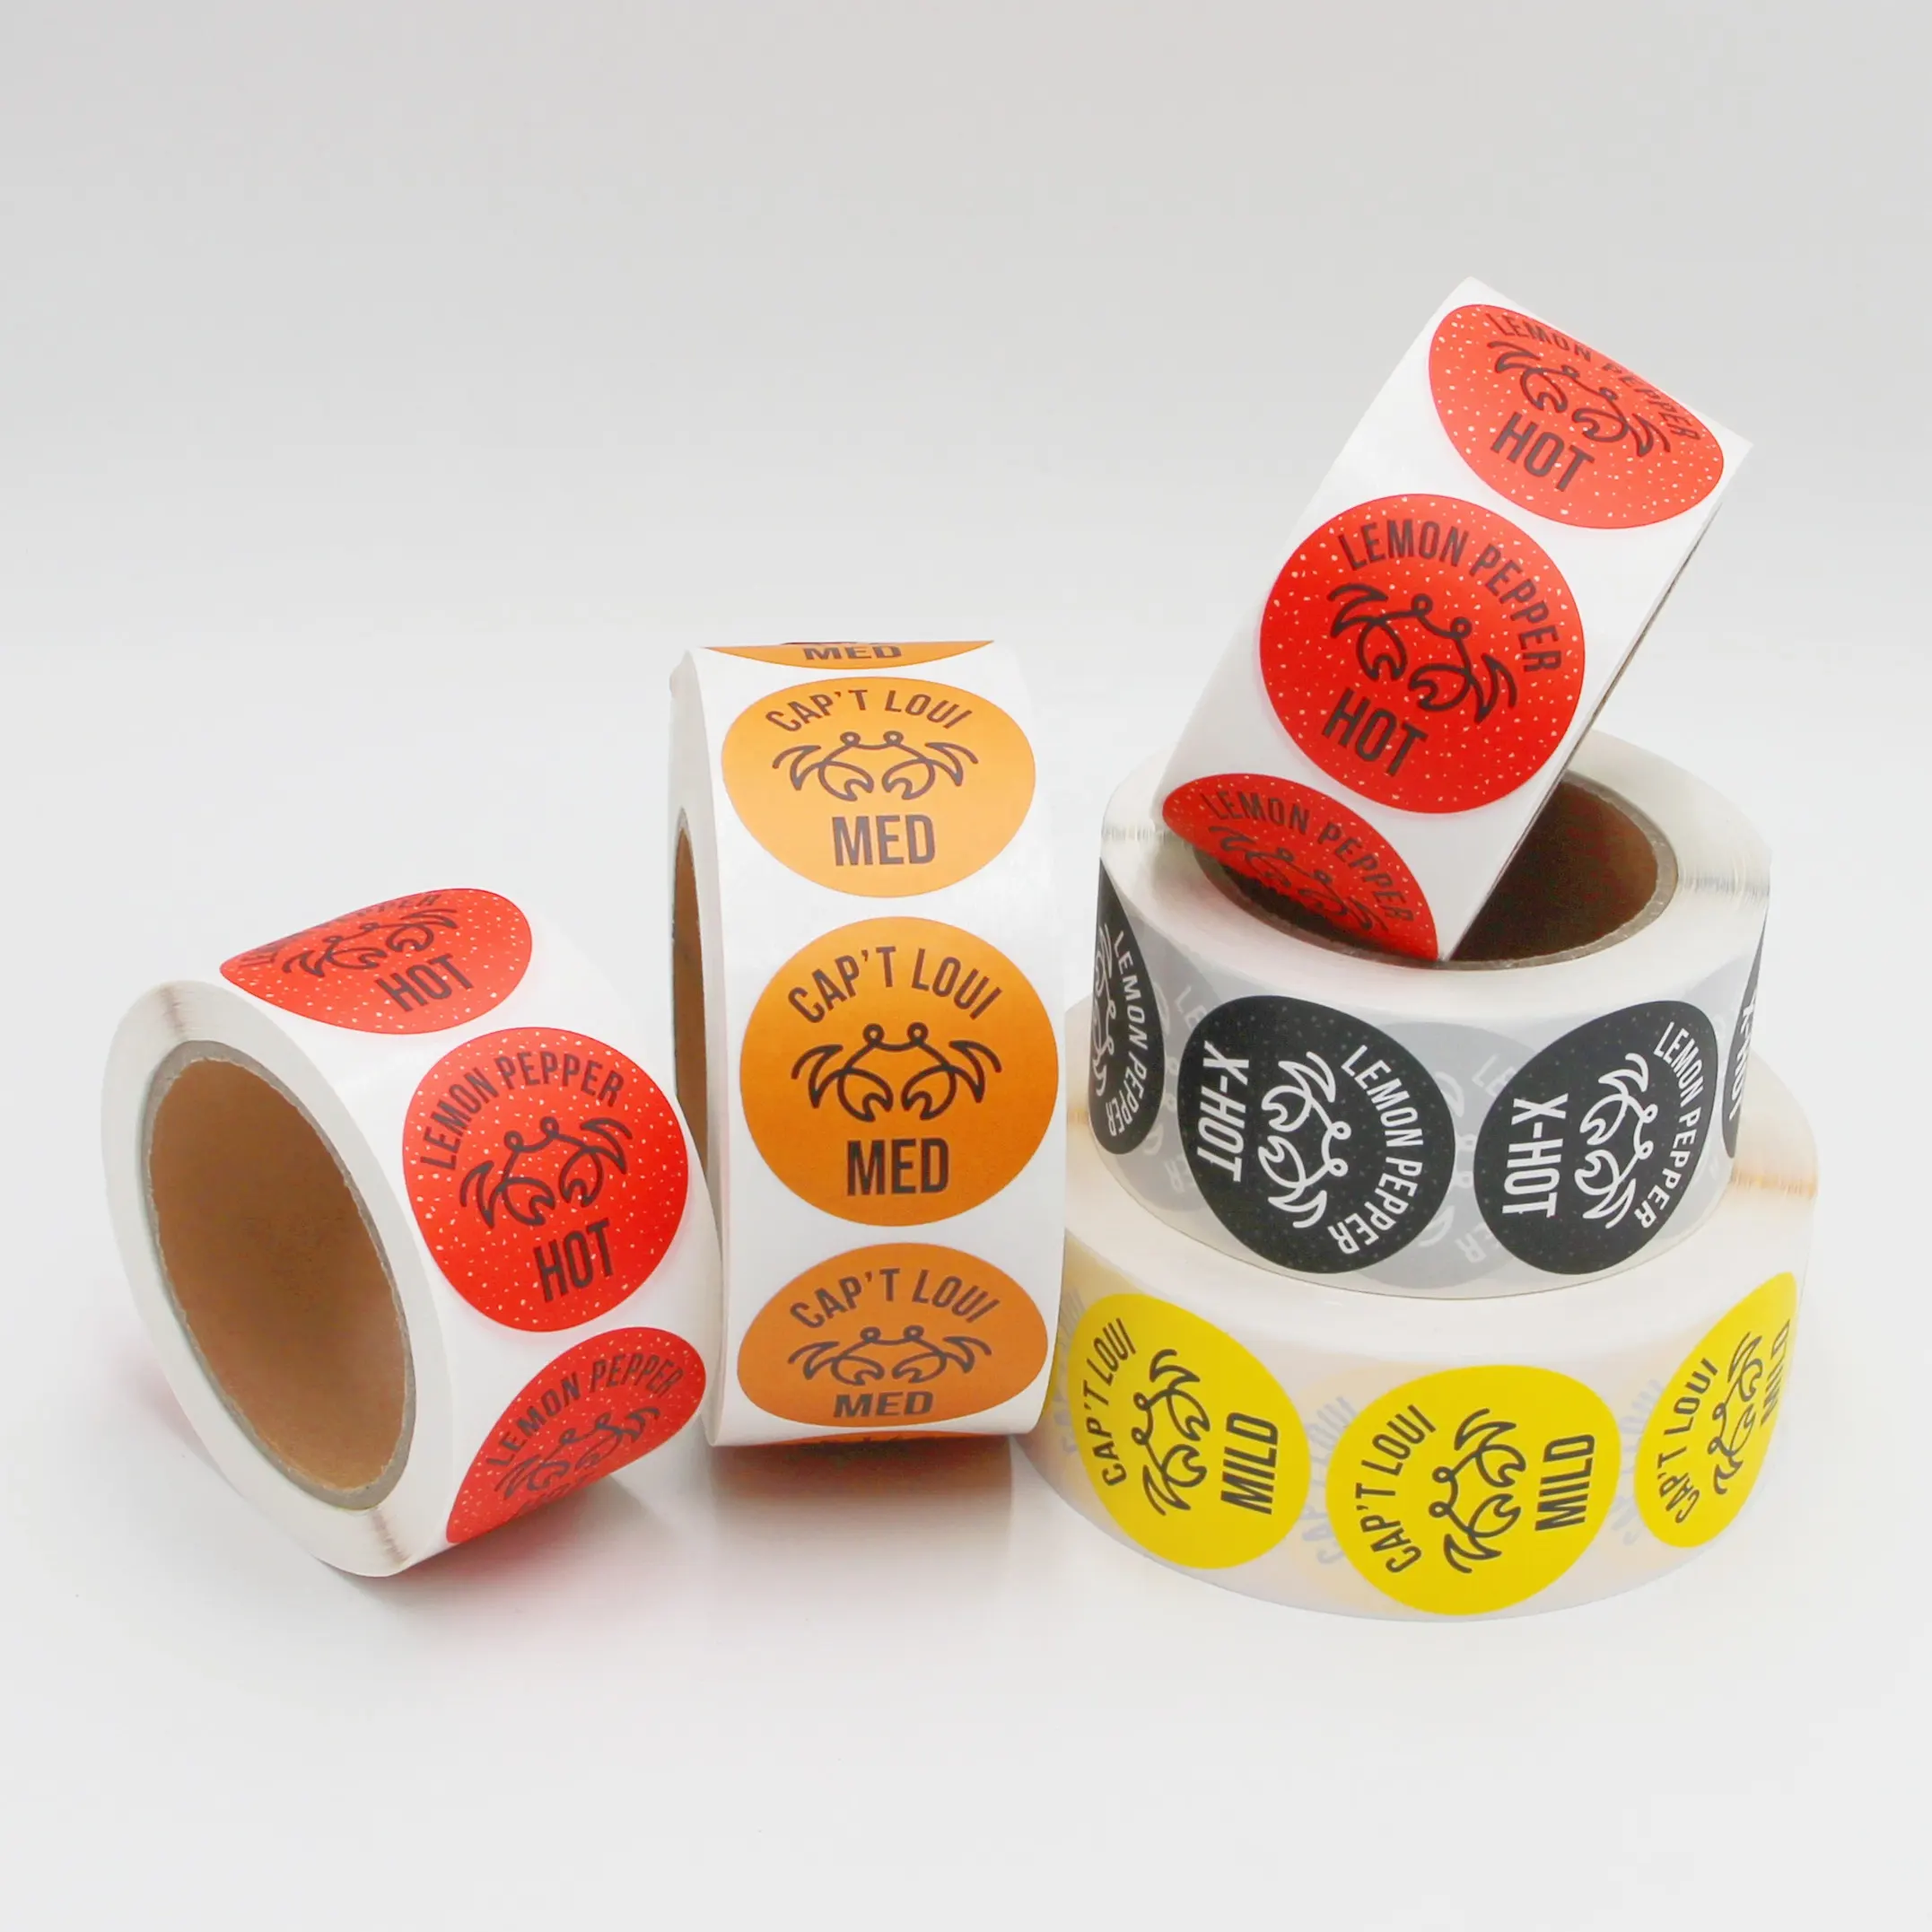 Etiquetas adhesivas redondas impermeables personalizadas para botella, etiqueta de tarro de especias, etiqueta adhesiva de agradecimiento, pegatina mate